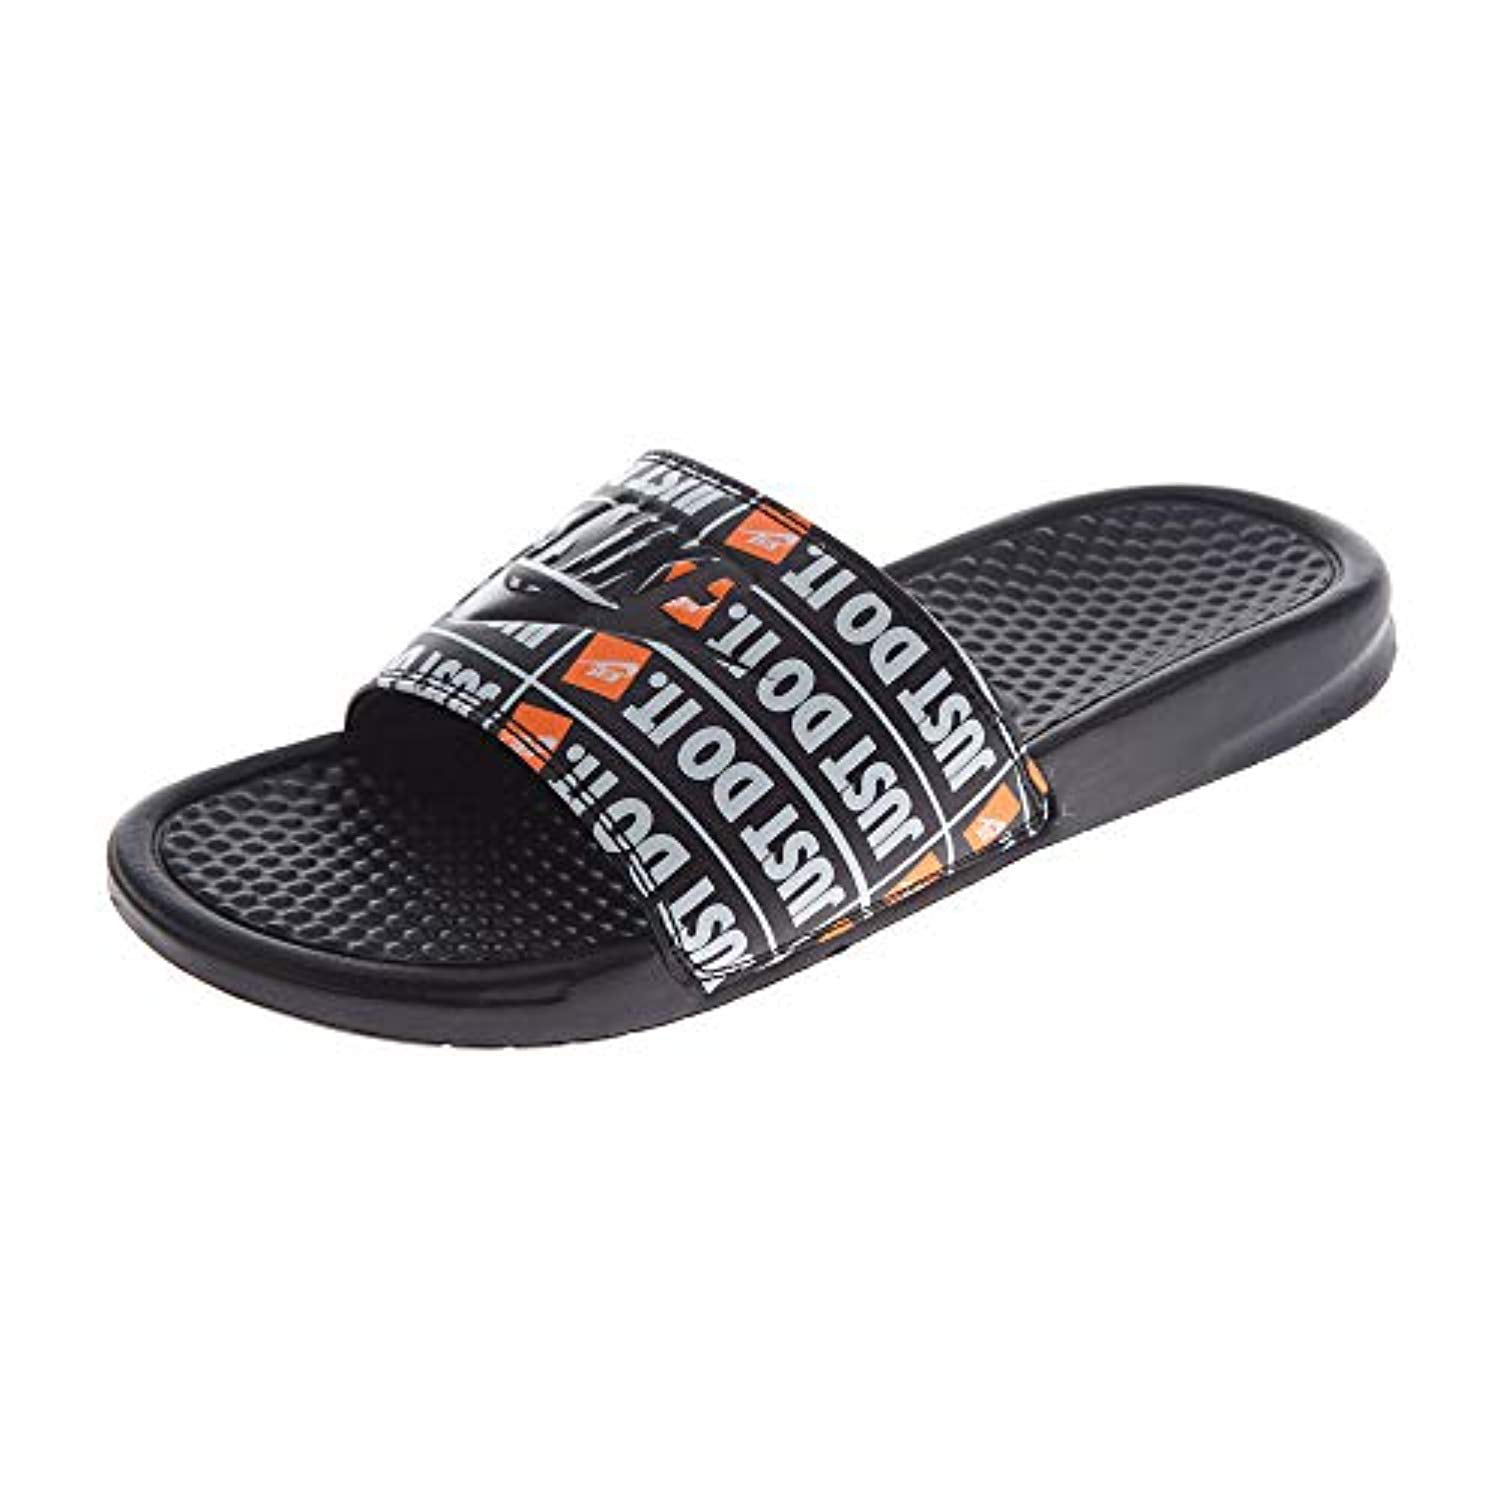 Nike Men's Print Slide Sandals (13, Black/Black) Walmart.com